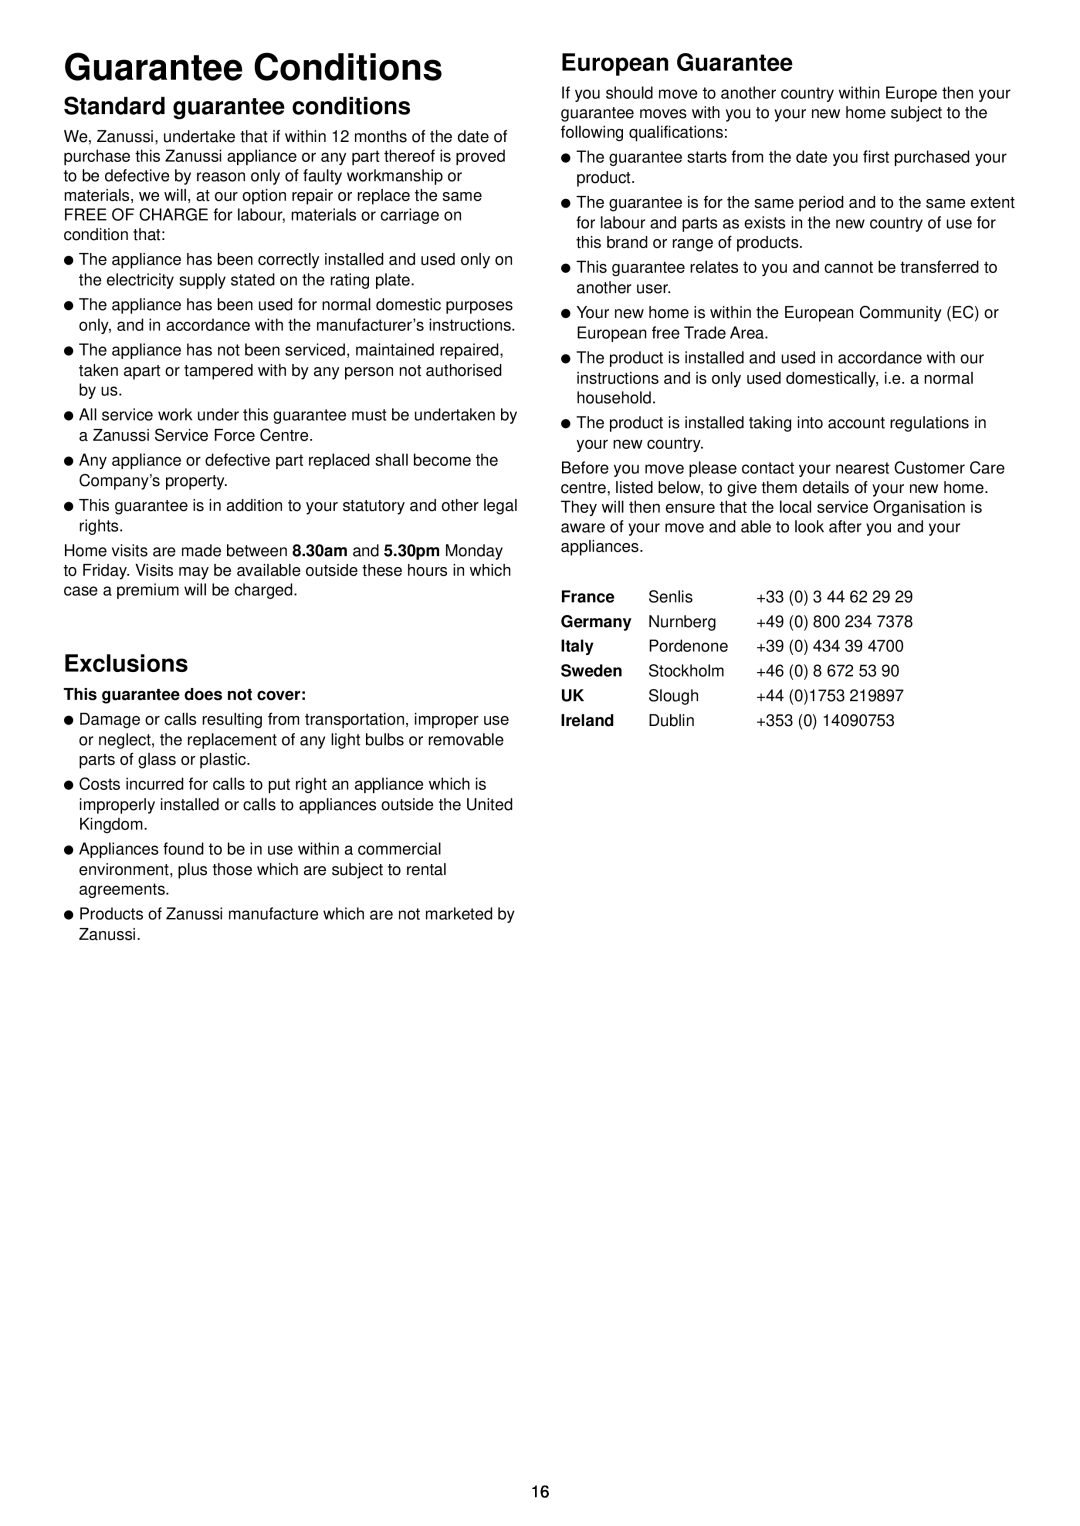 Zanussi DE 6854 manual Guarantee Conditions, Standard guarantee conditions, Exclusions, European Guarantee 